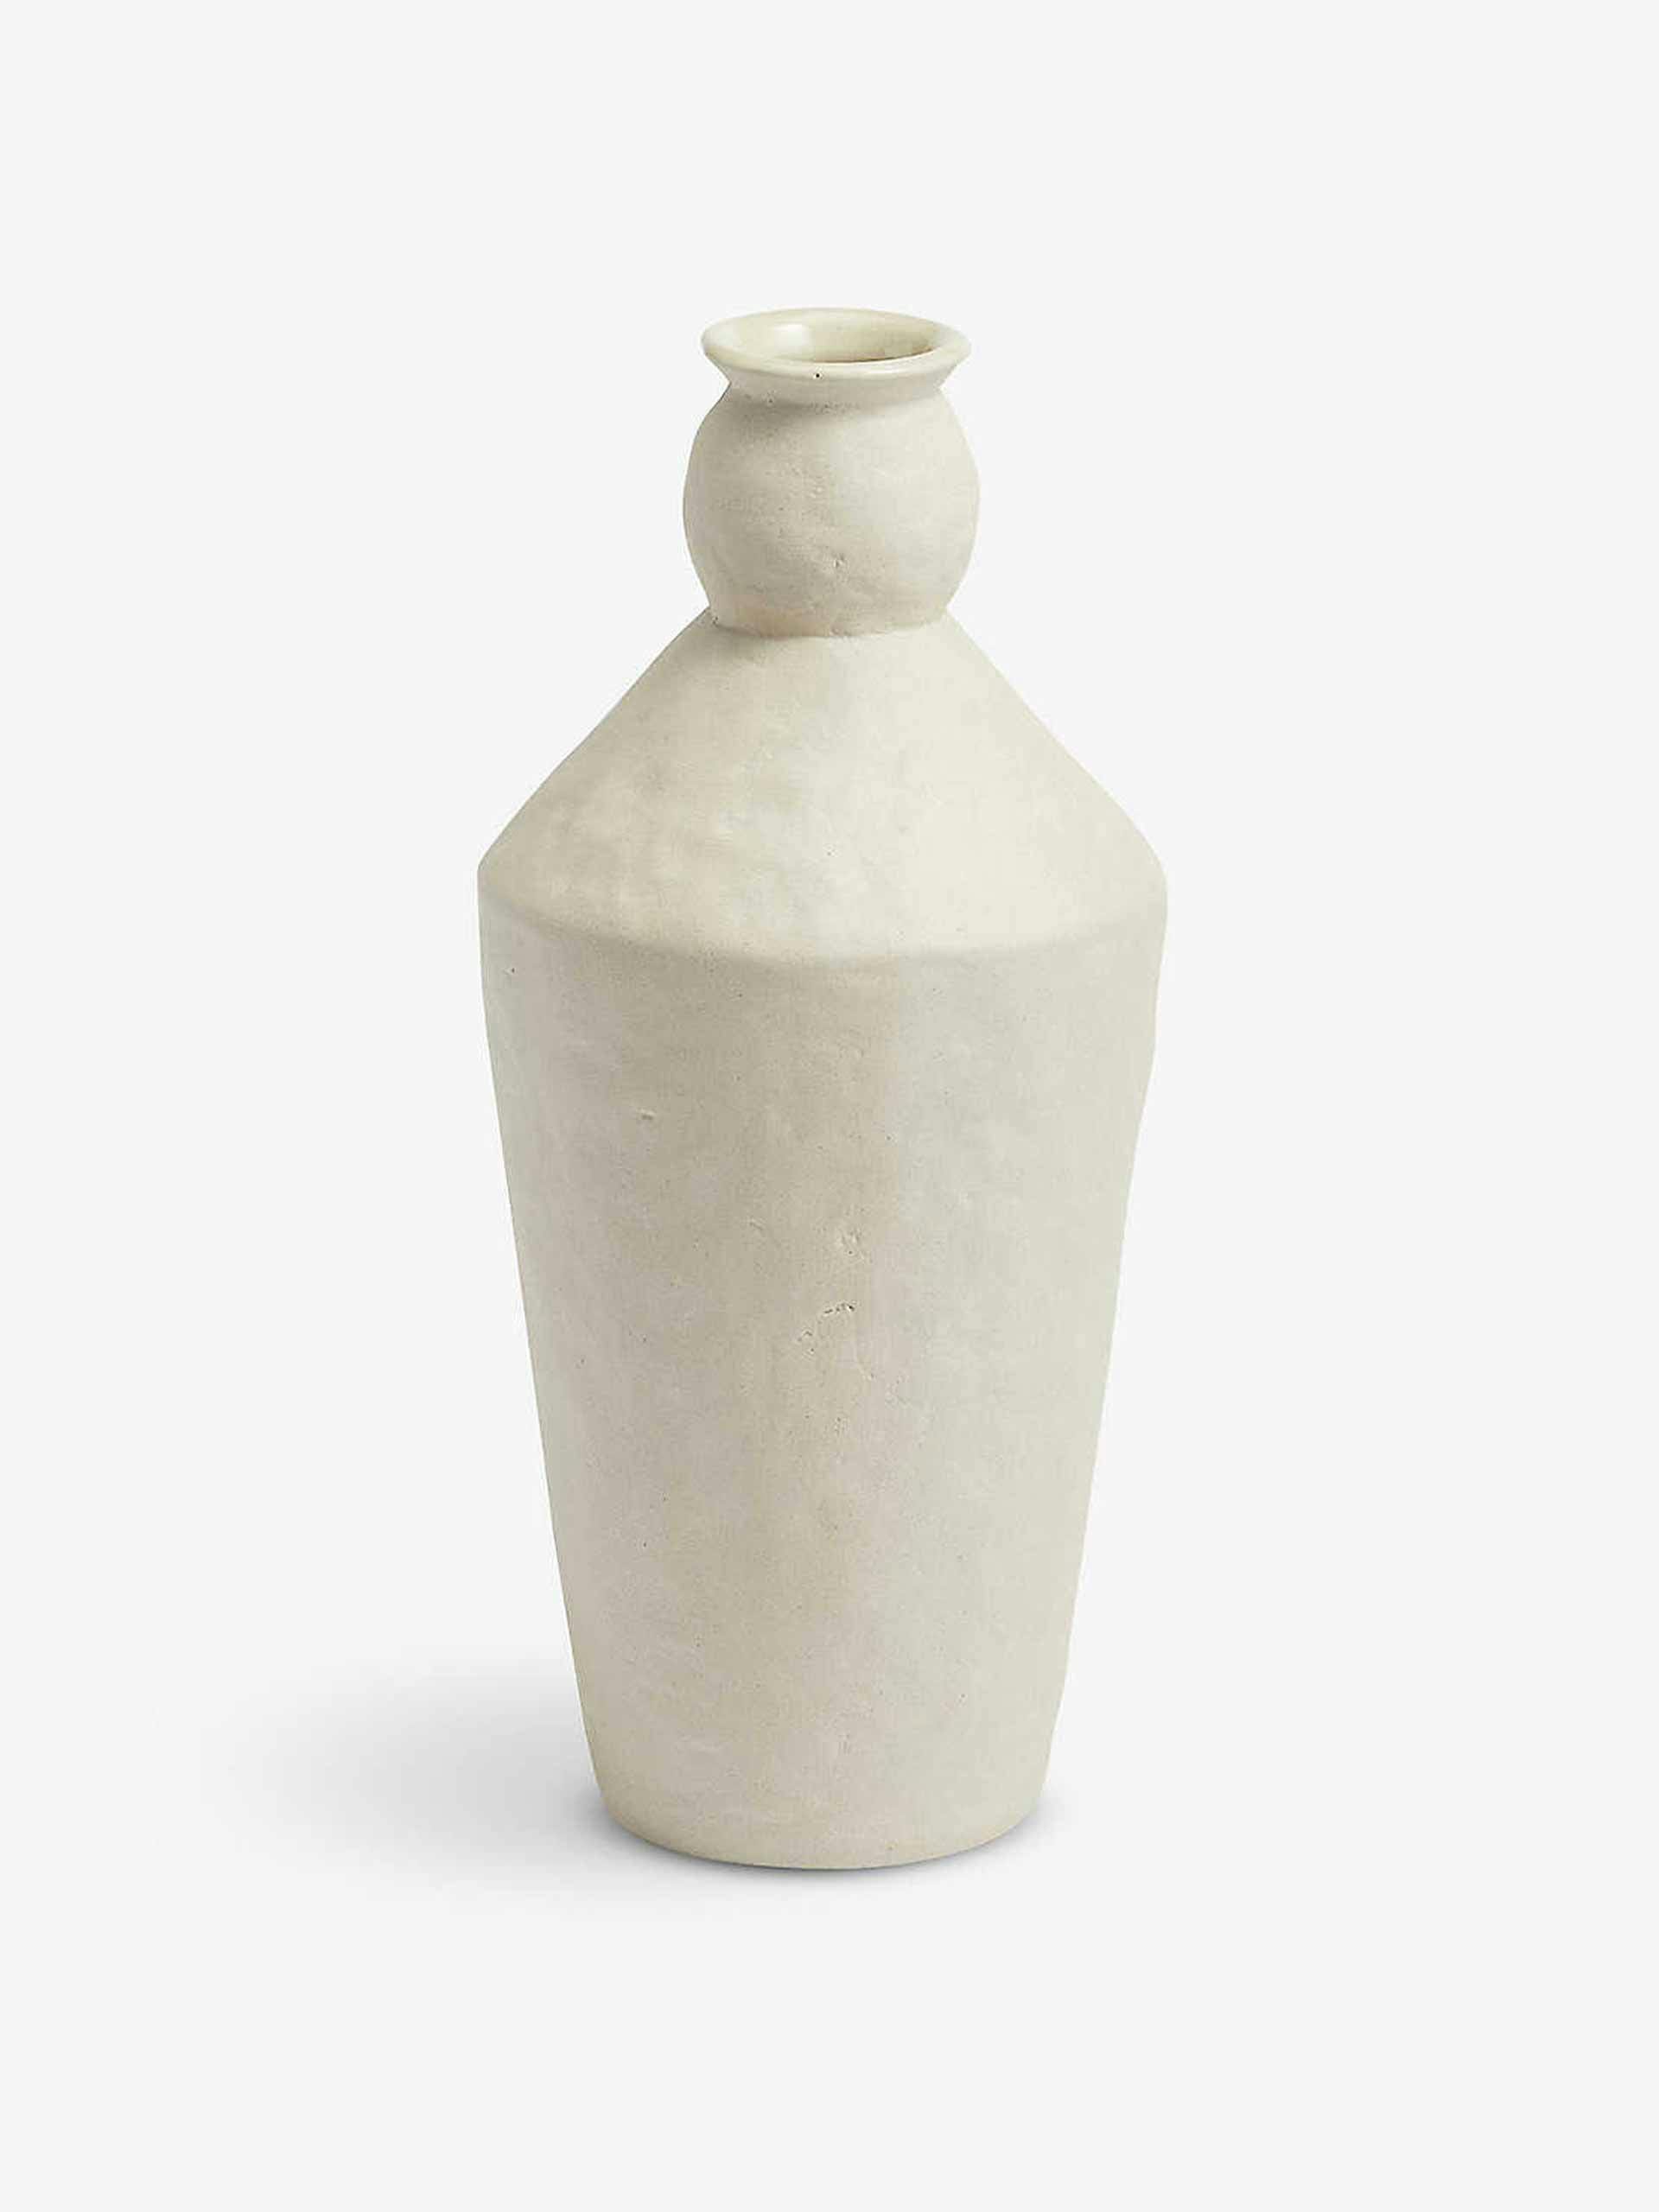 Earthenware bottle vase